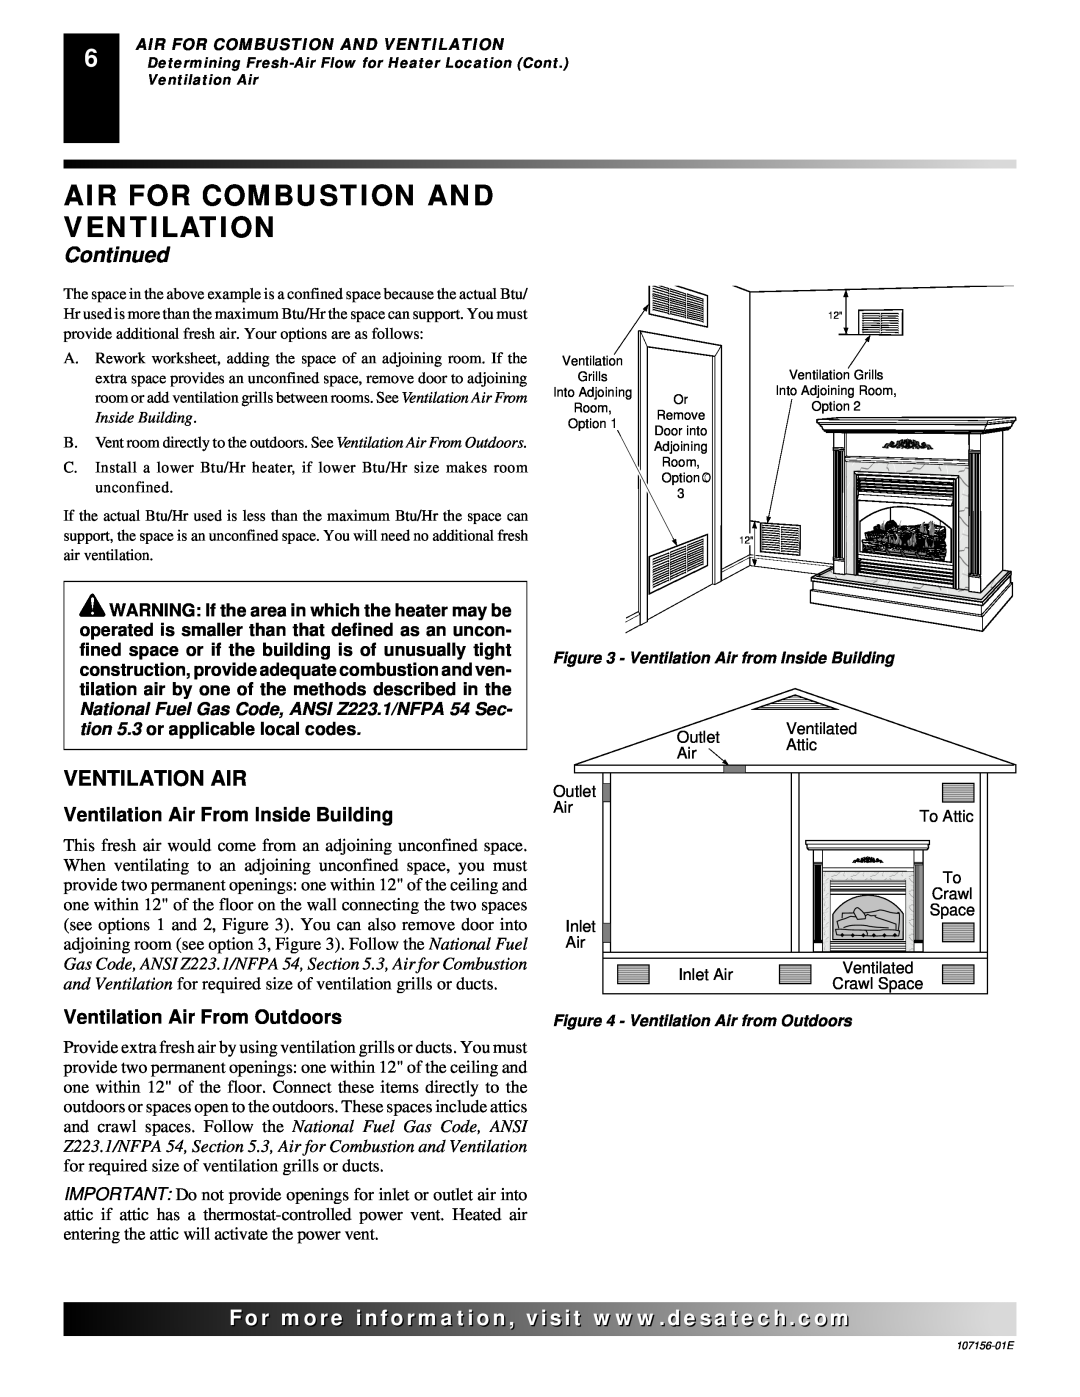 Vanguard Heating 107156-01E.pdf Ventilation Air From Inside Building, Ventilation Air From Outdoors, Continued 